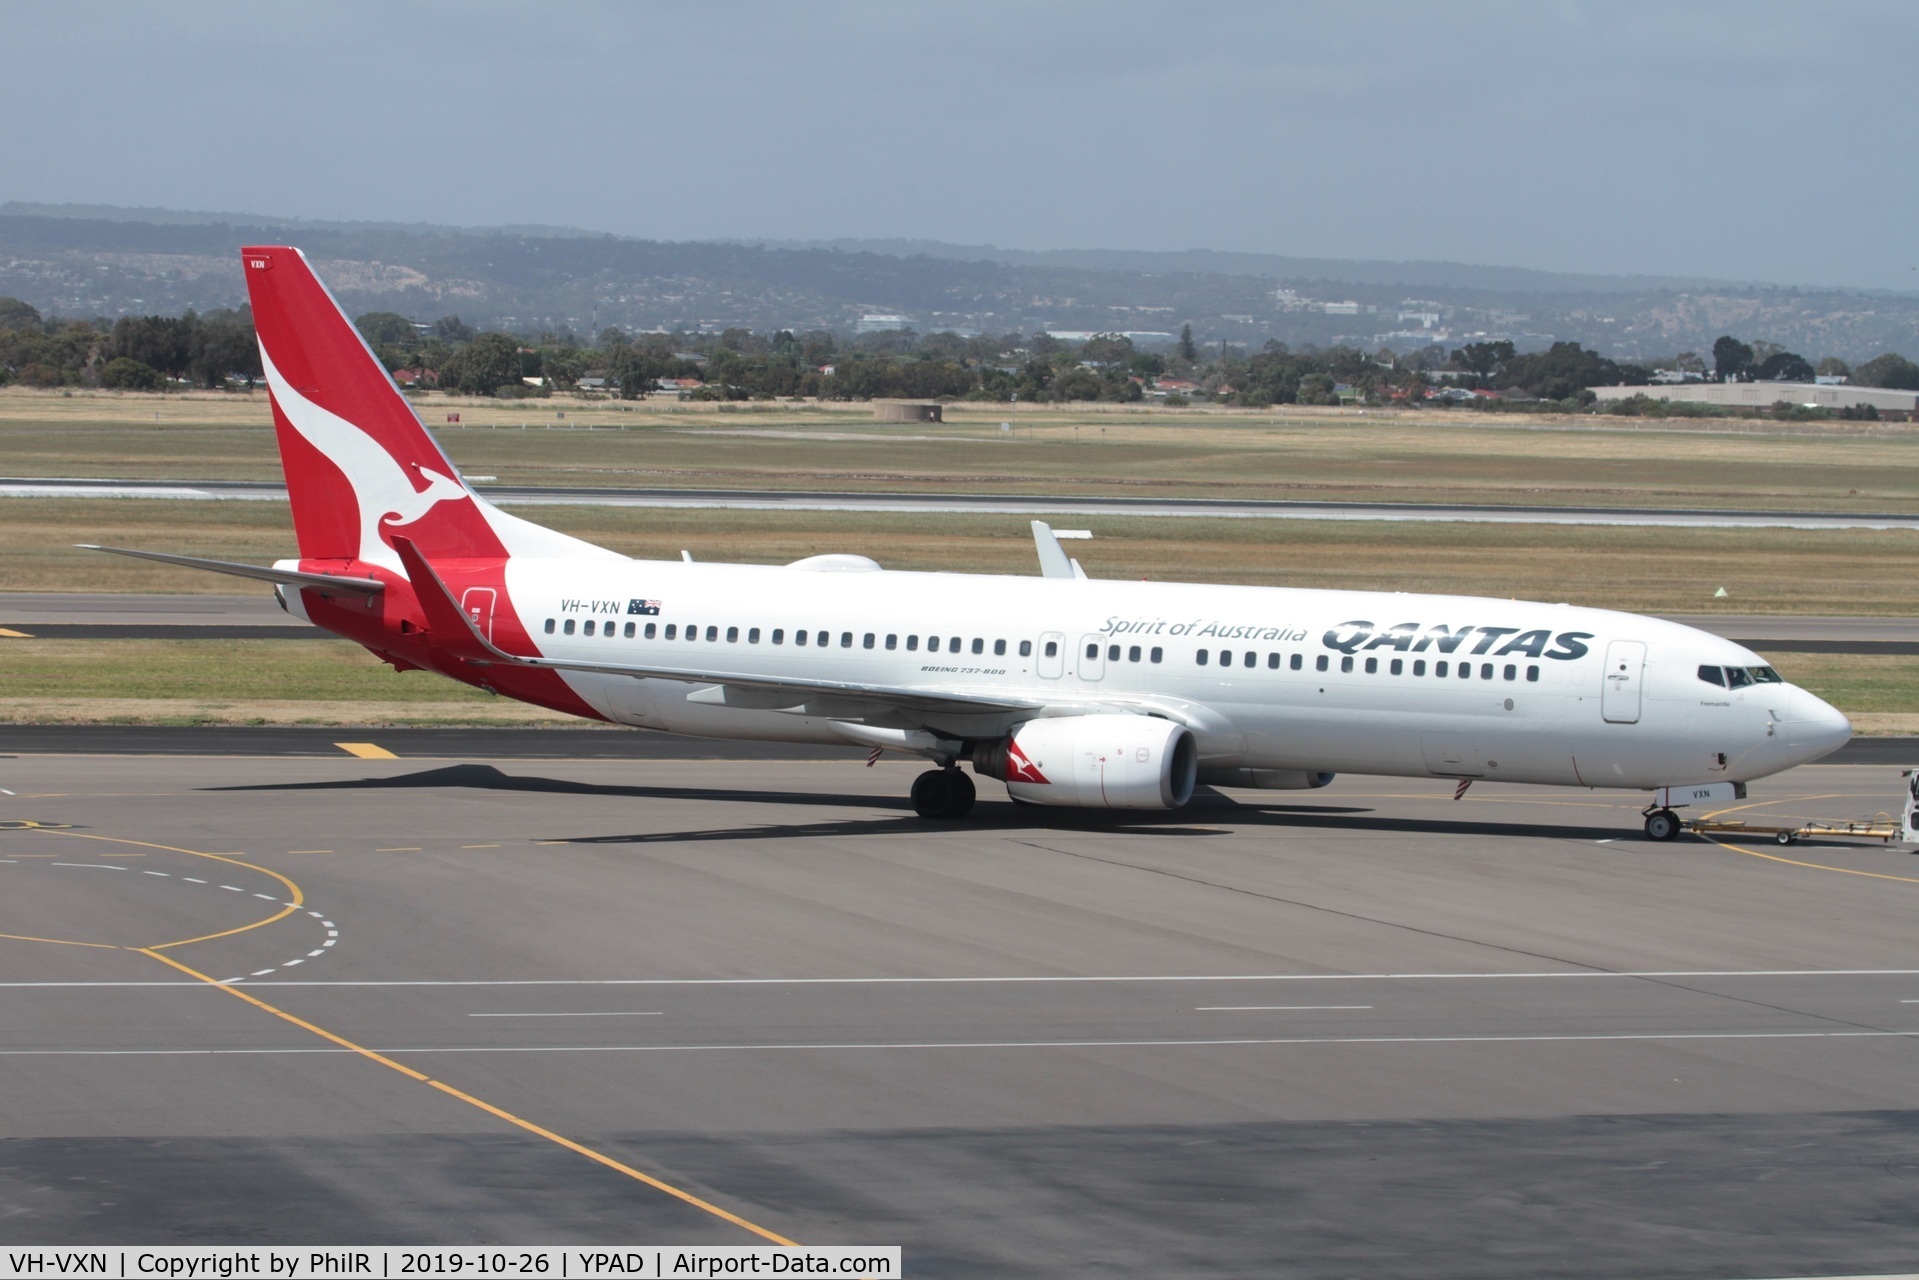 VH-VXN, 2002 Boeing 737-838 C/N 33484, Pushback at Adelaide